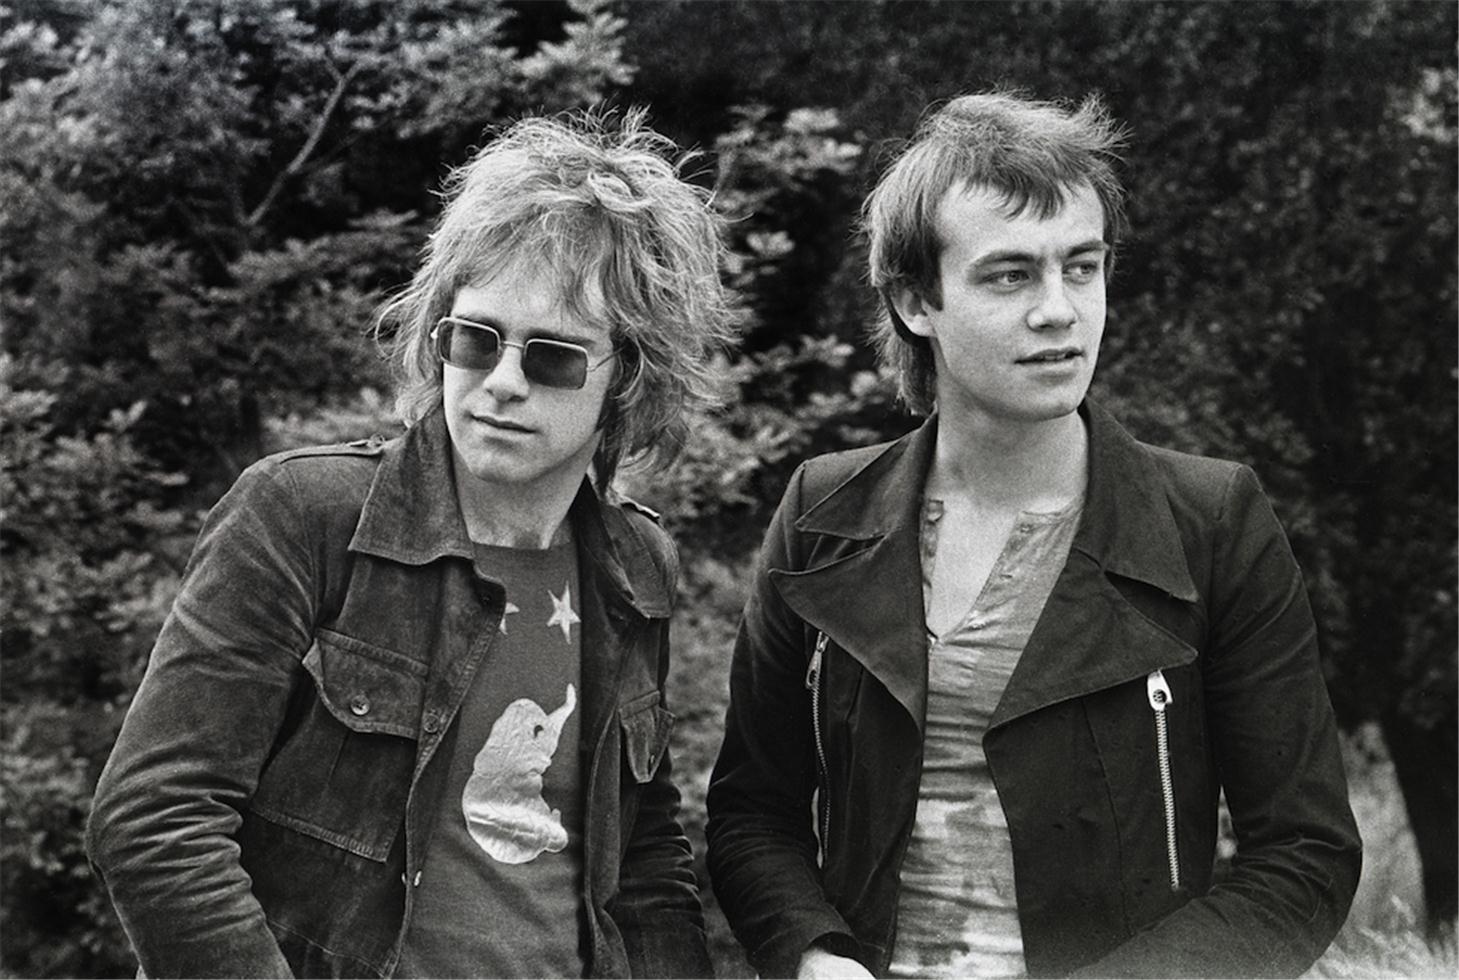 Barrie Wentzell Black and White Photograph - Elton John and Bernie Taupin, Hampstead Heath, London, 1970